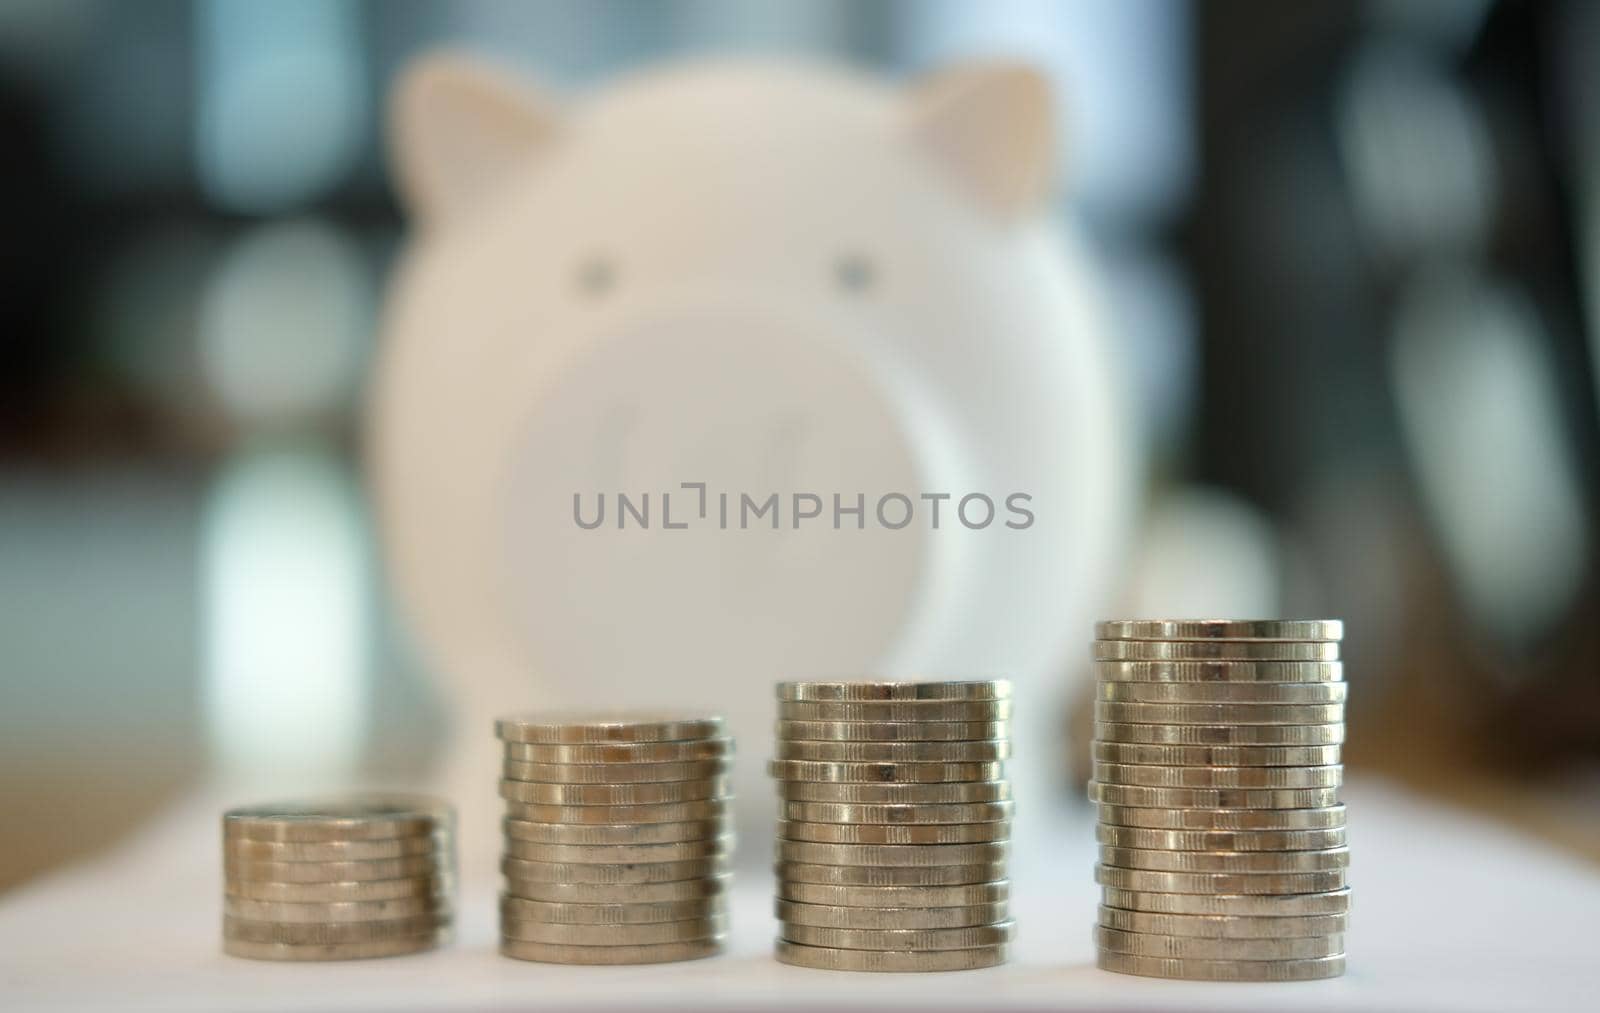 coin & white piggy bank. money savings, cash deposit concept